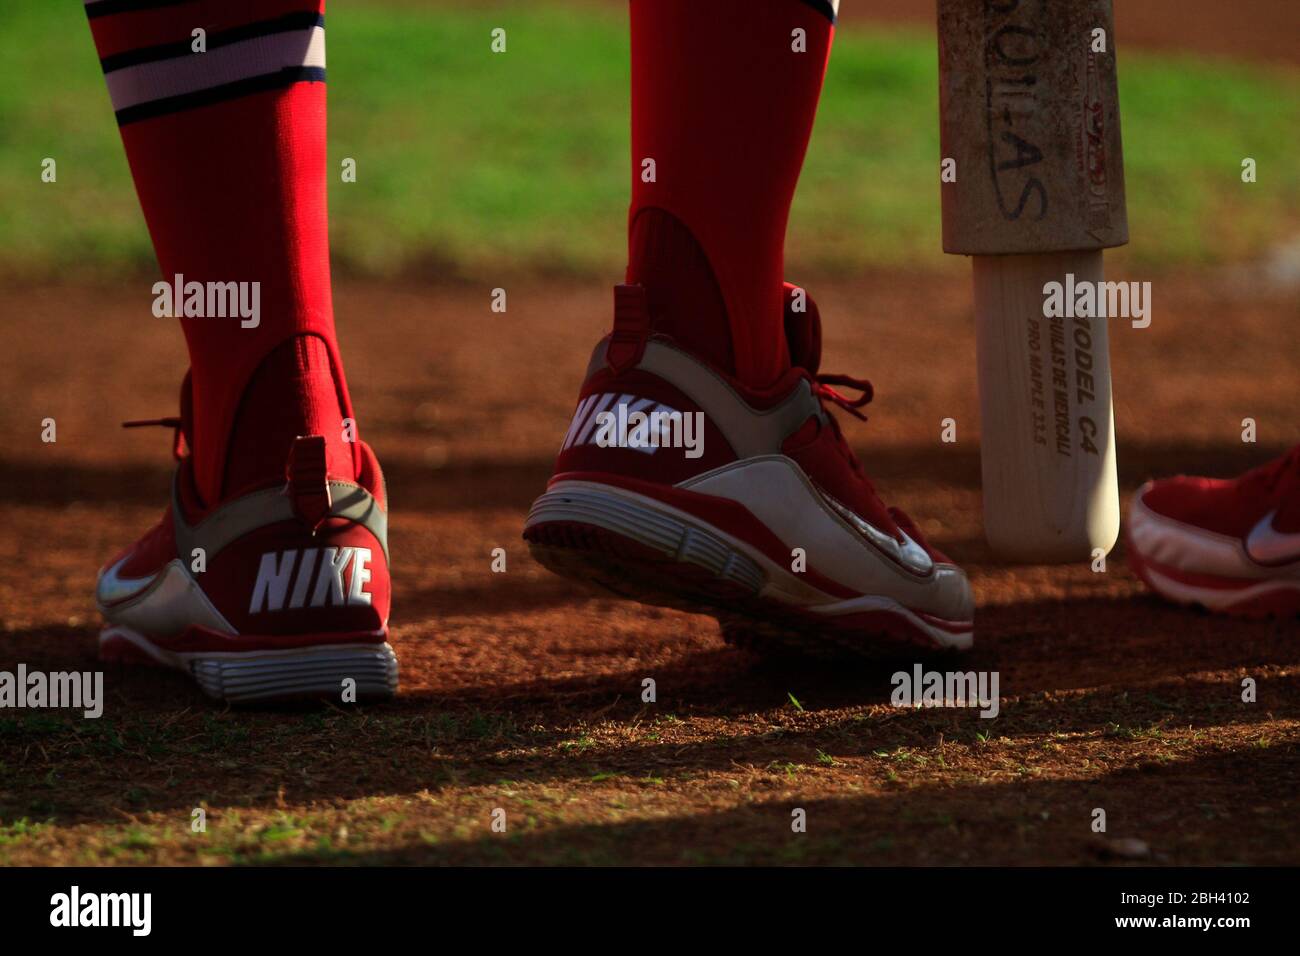 Nike baseball hi-res stock photography and images - Alamy